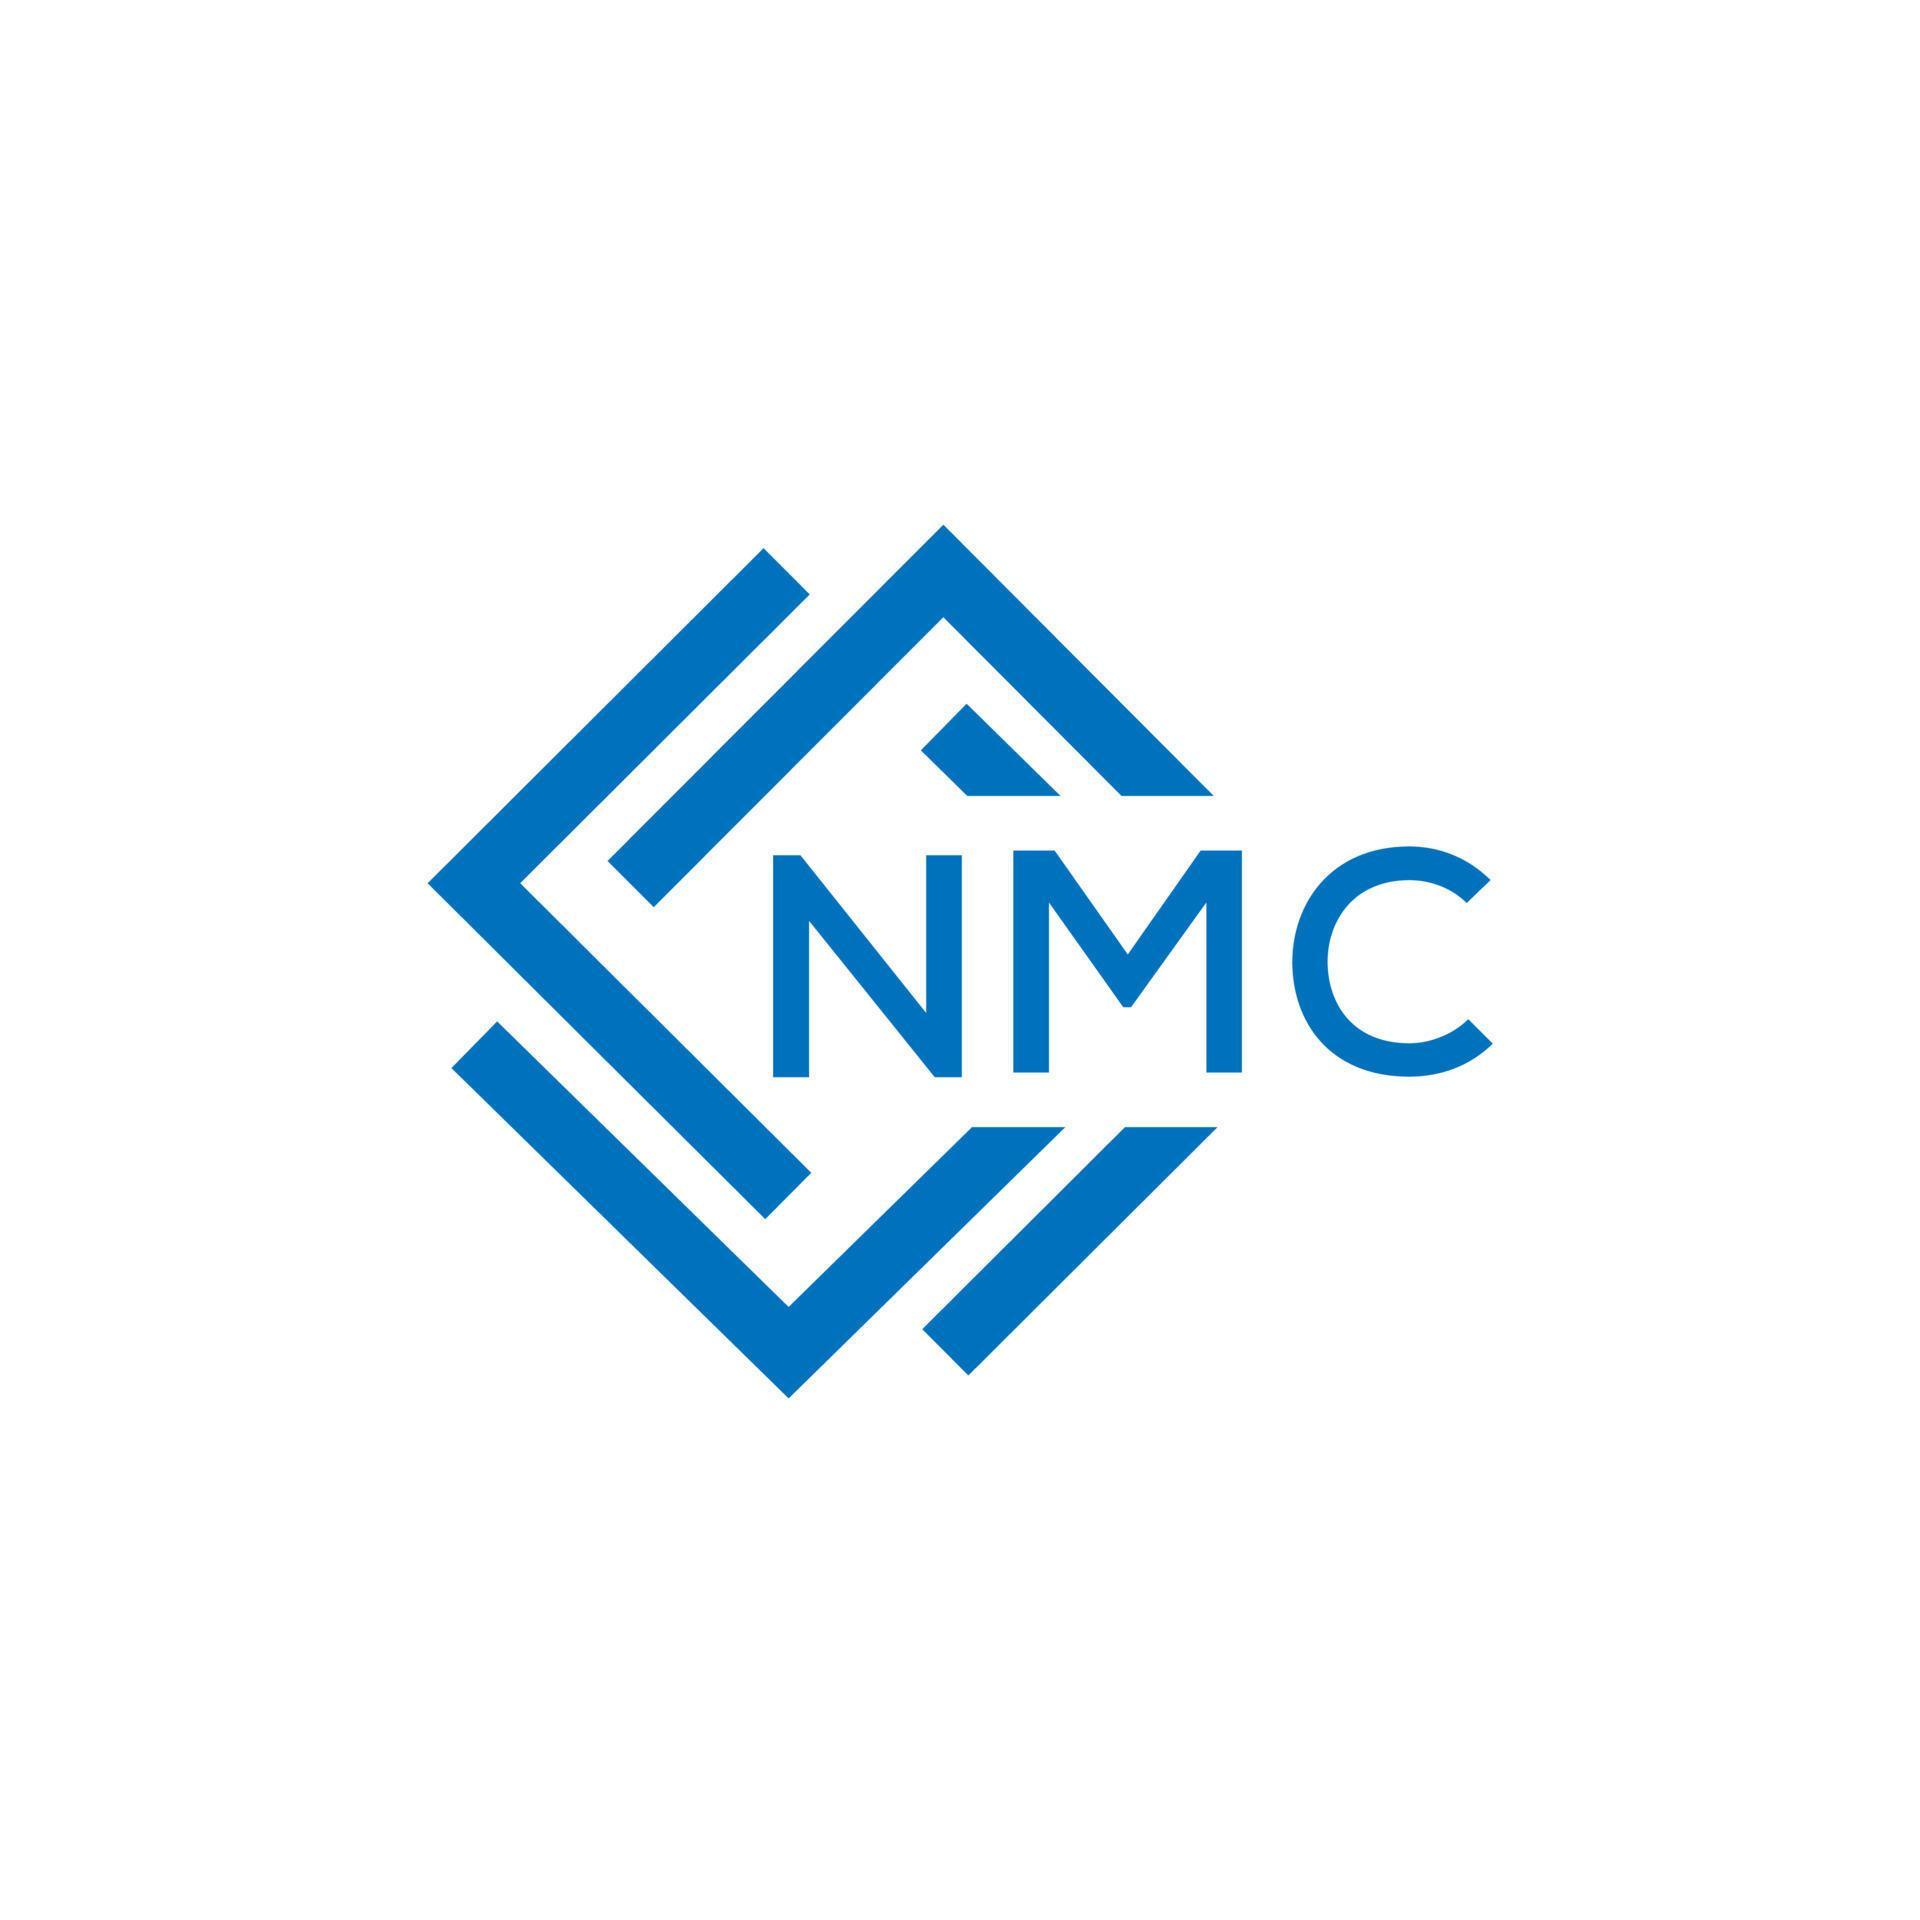 NMC letter logo design on white background. NMC creative circle letter ...